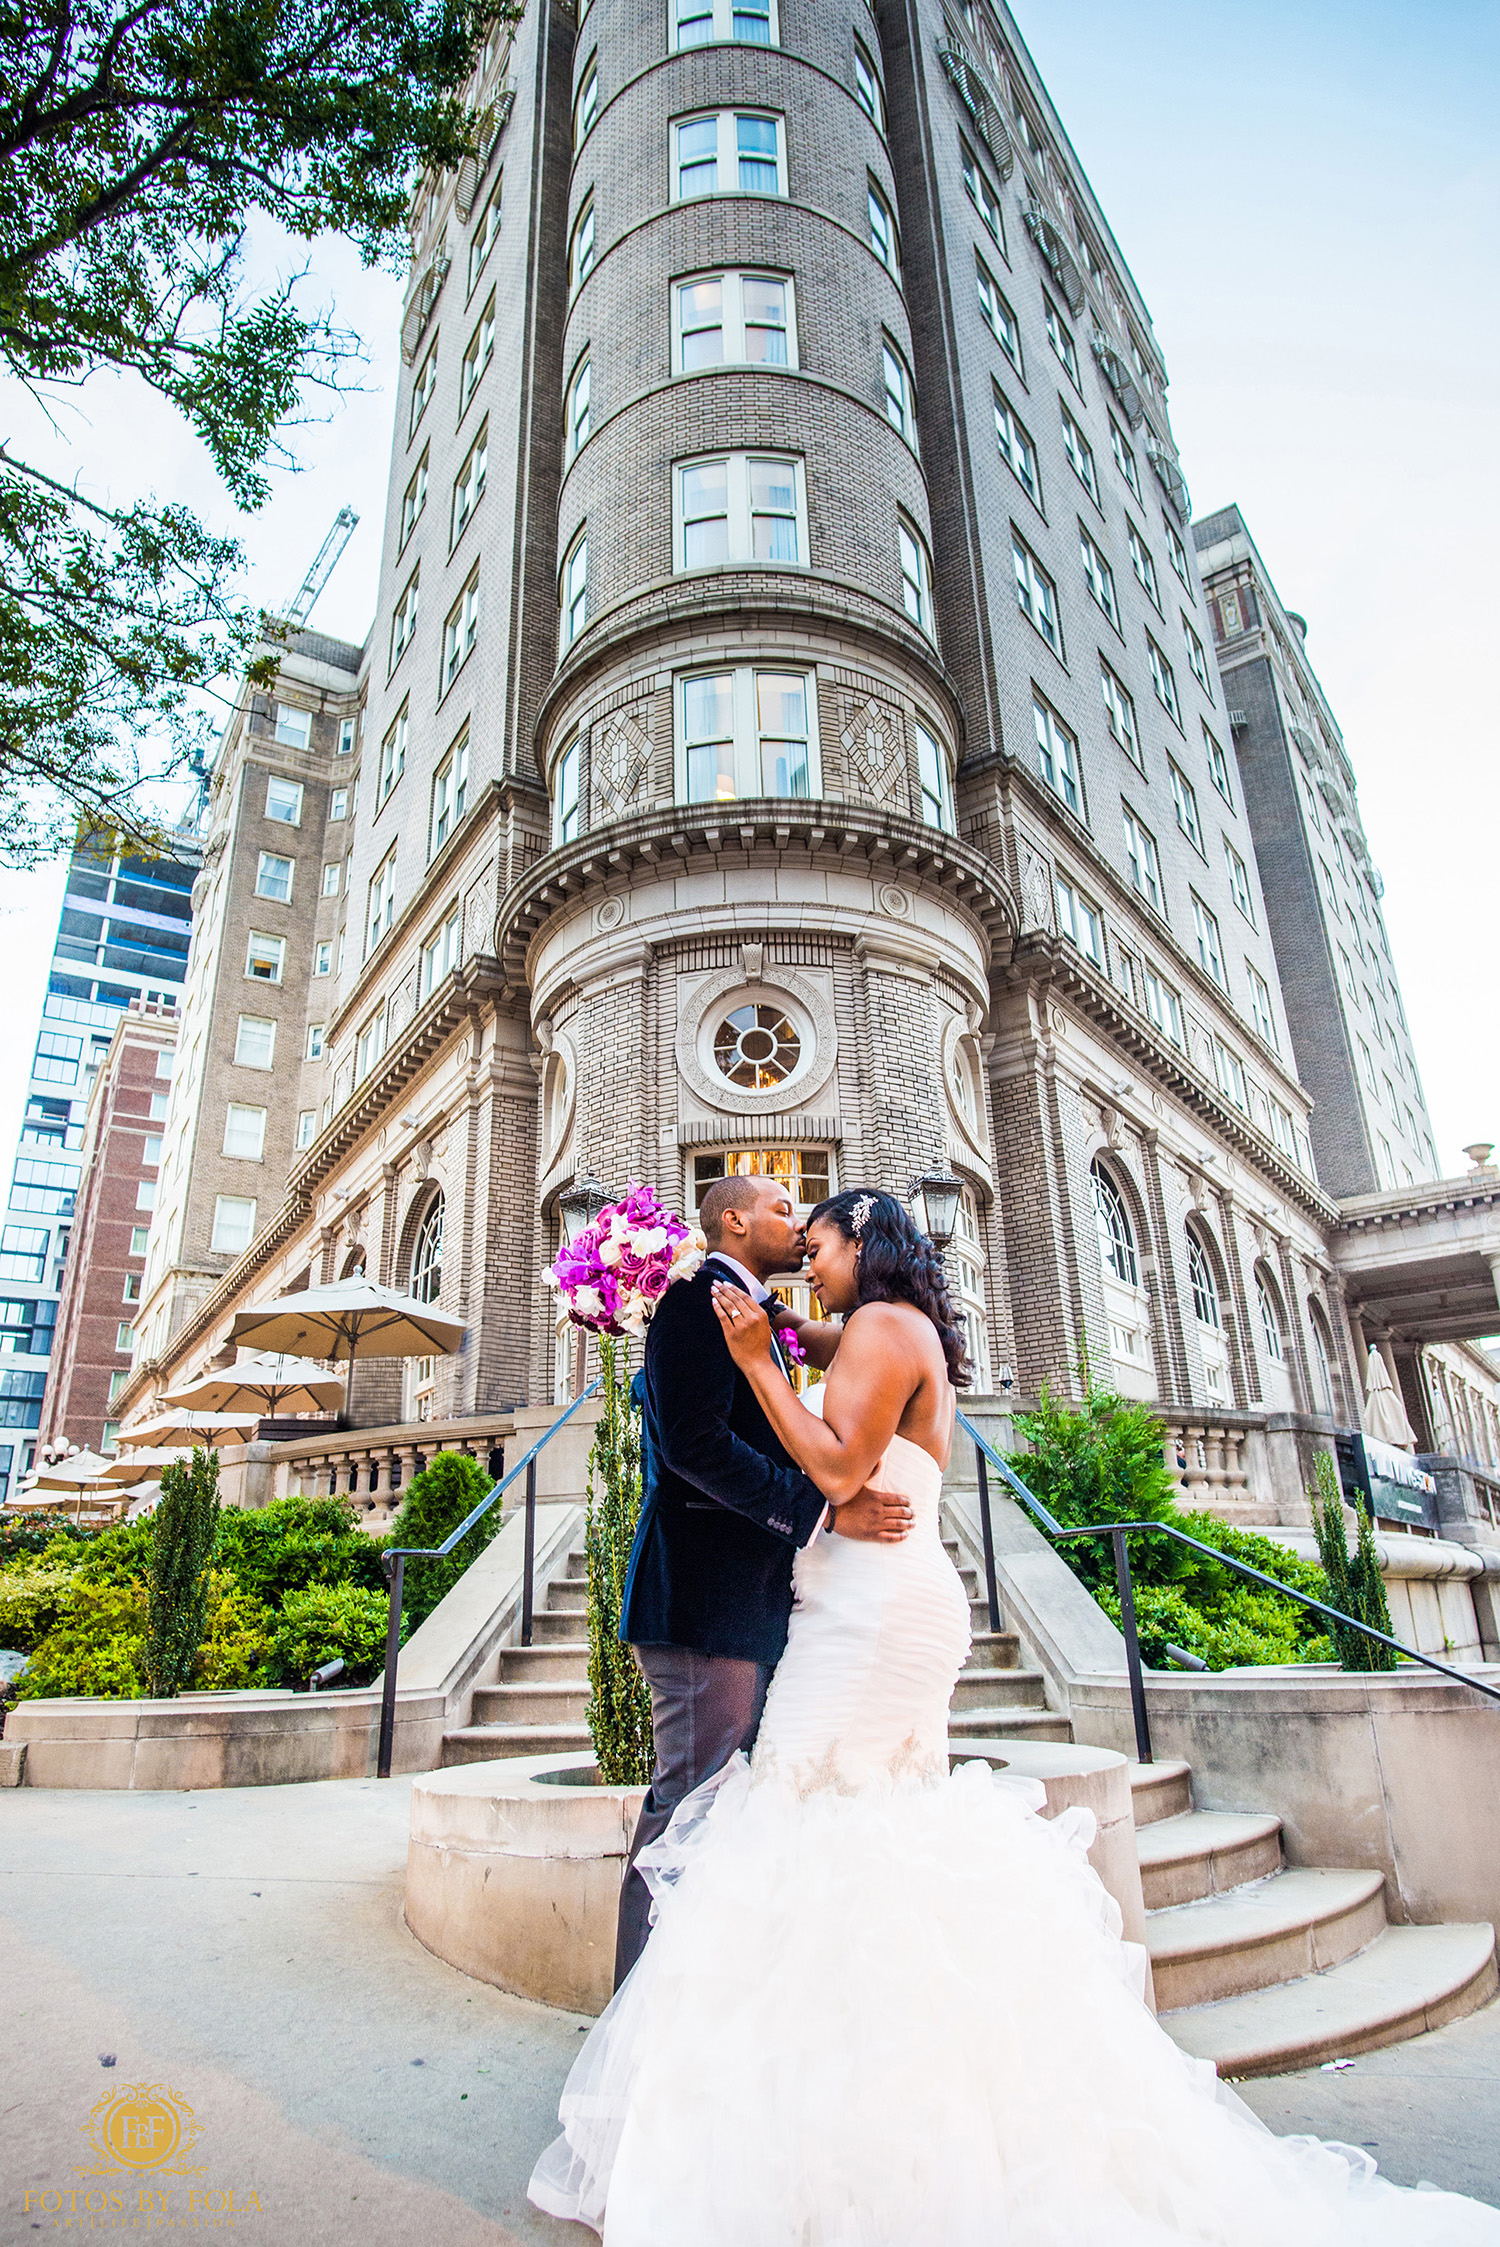 Fotos by Fola | Atlanta Wedding Photographer | Georgian Terrace Hotel Atlanta | Raven J Events 